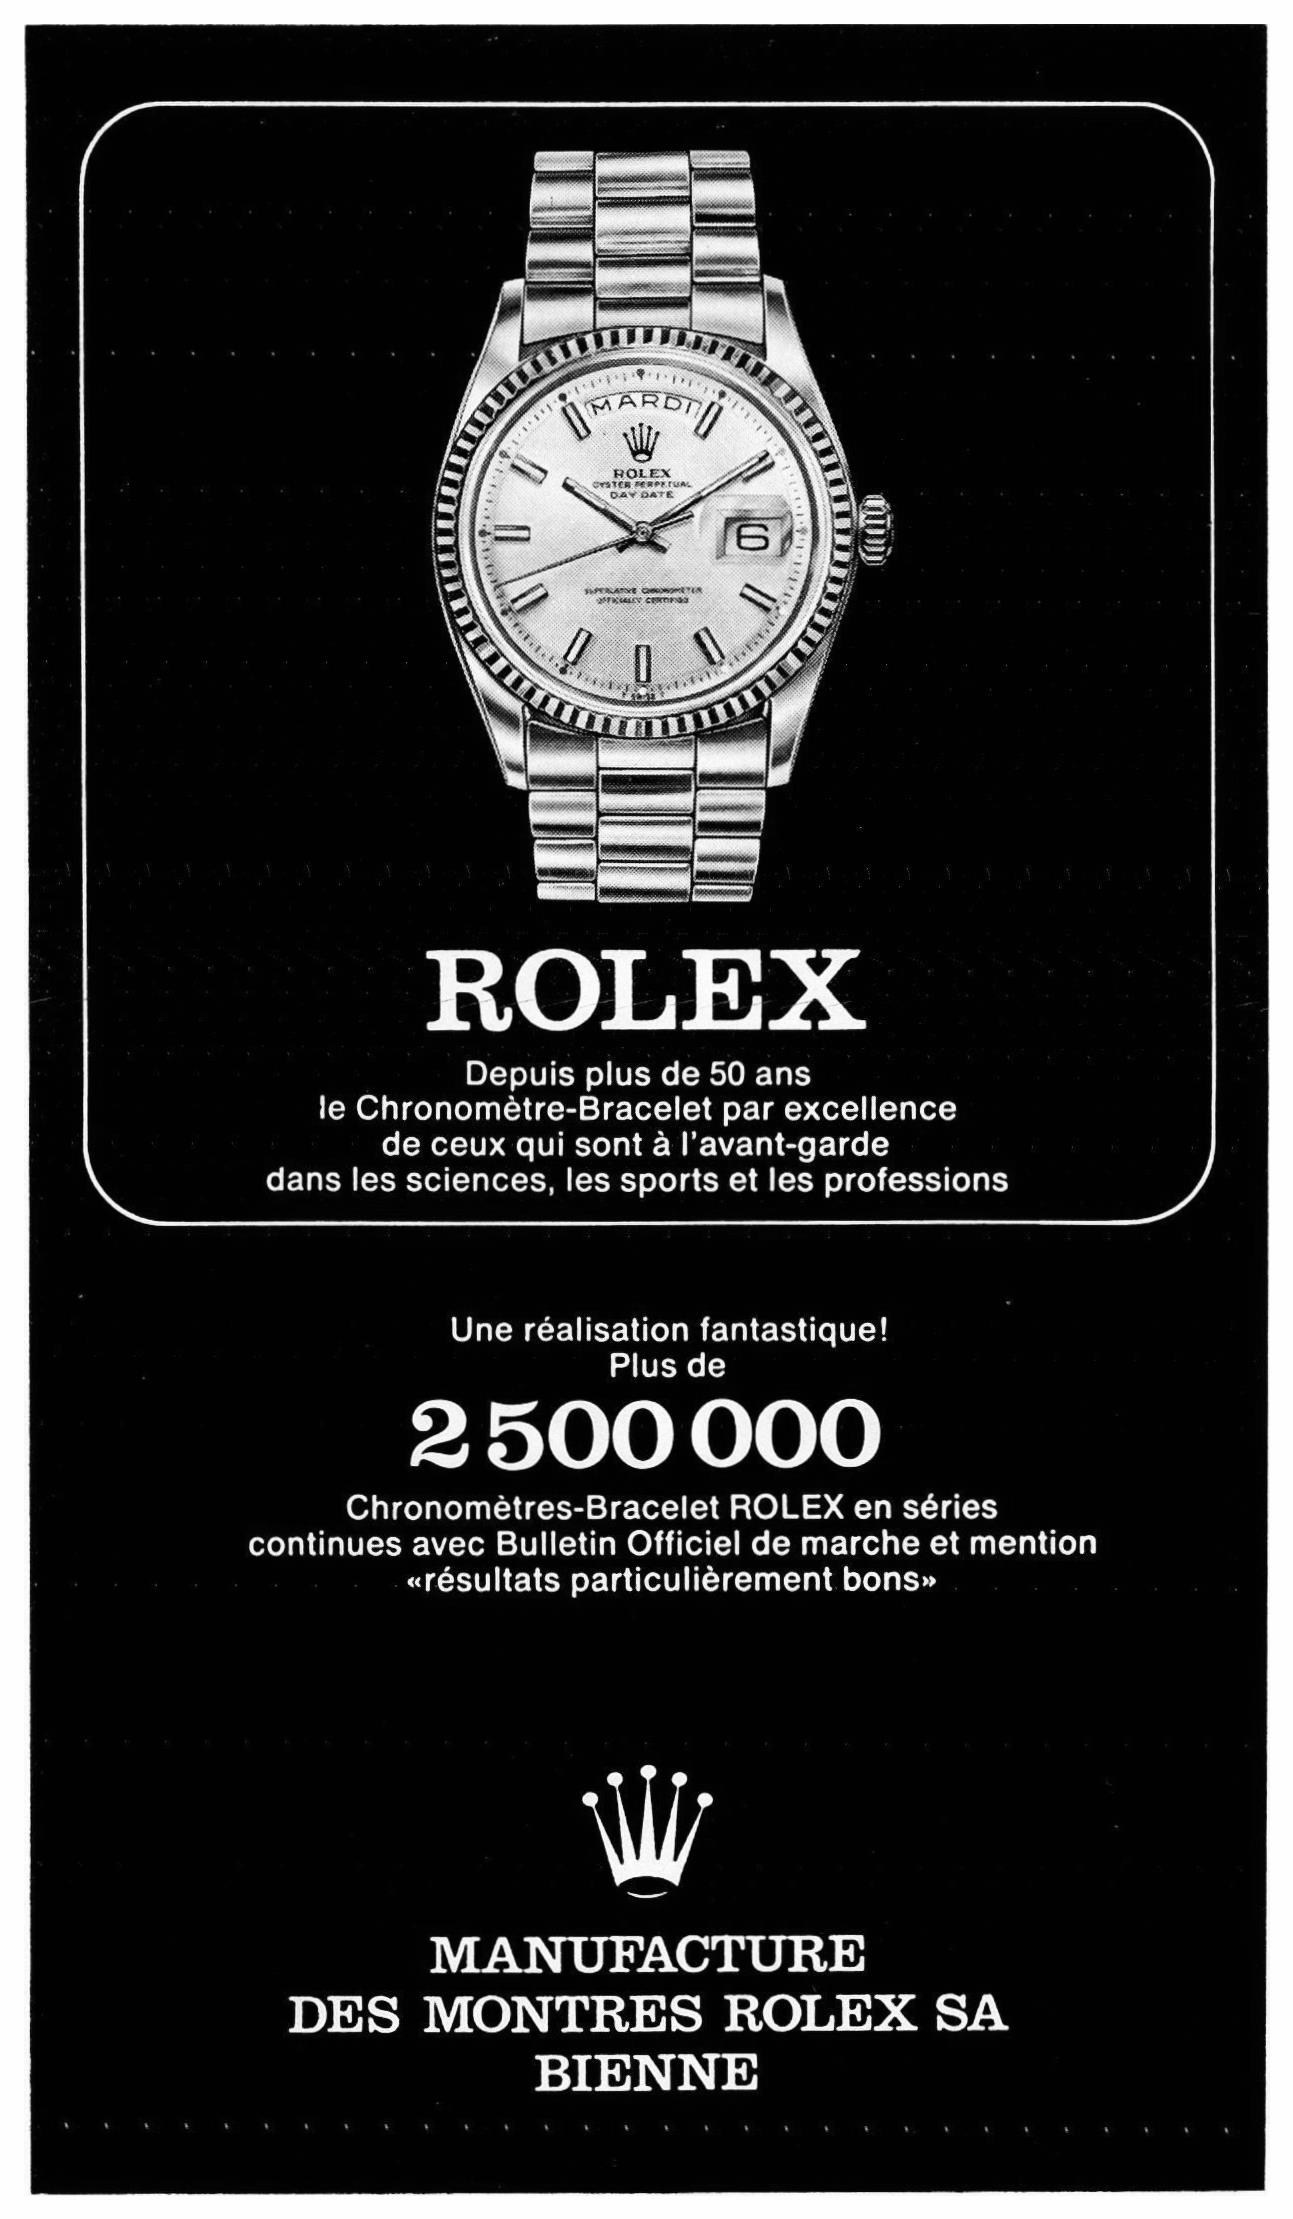 Rolex 1976 01.jpg